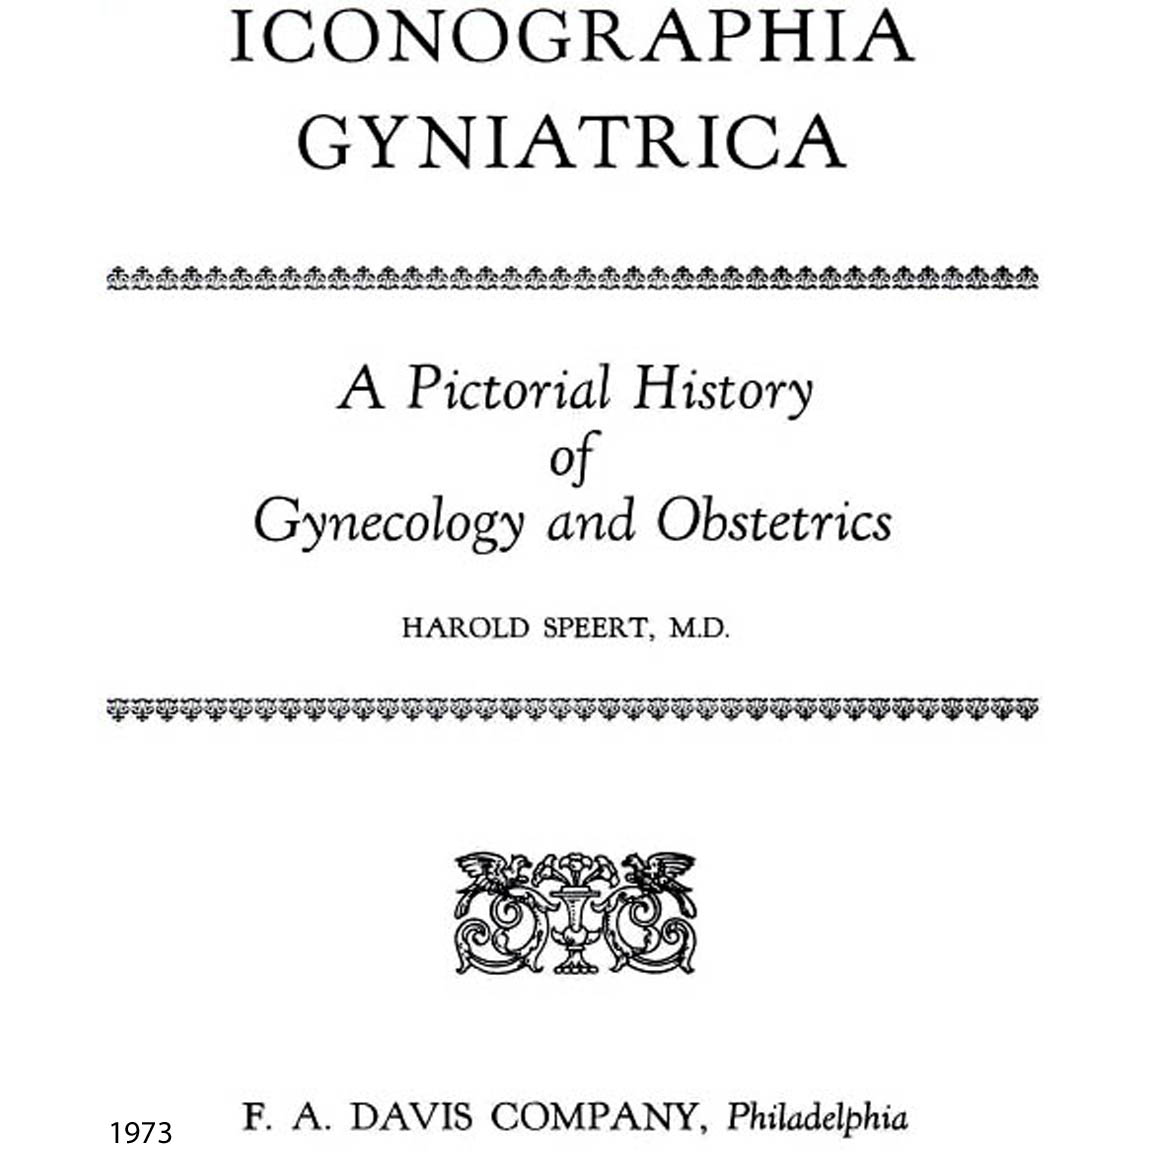 1973-SPEERT-Iconographia Gyniatricia-title page